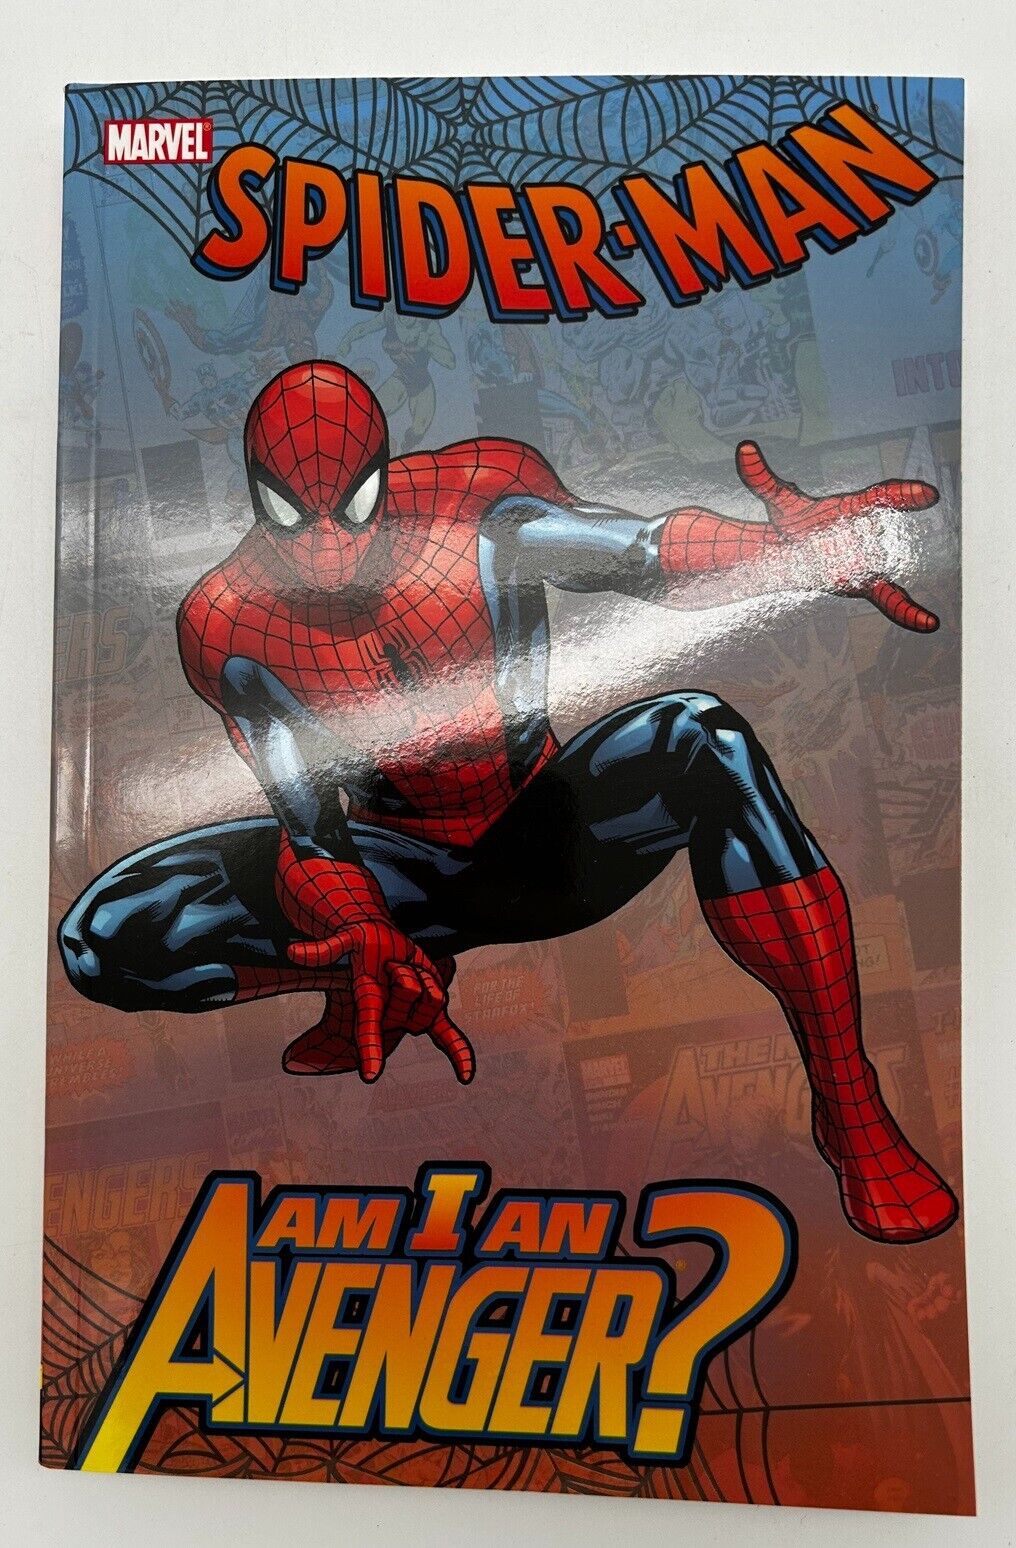 Spider-Man Am I Am Avenger - New Softback Trade Graphic Novel - Byrne, Bendis +